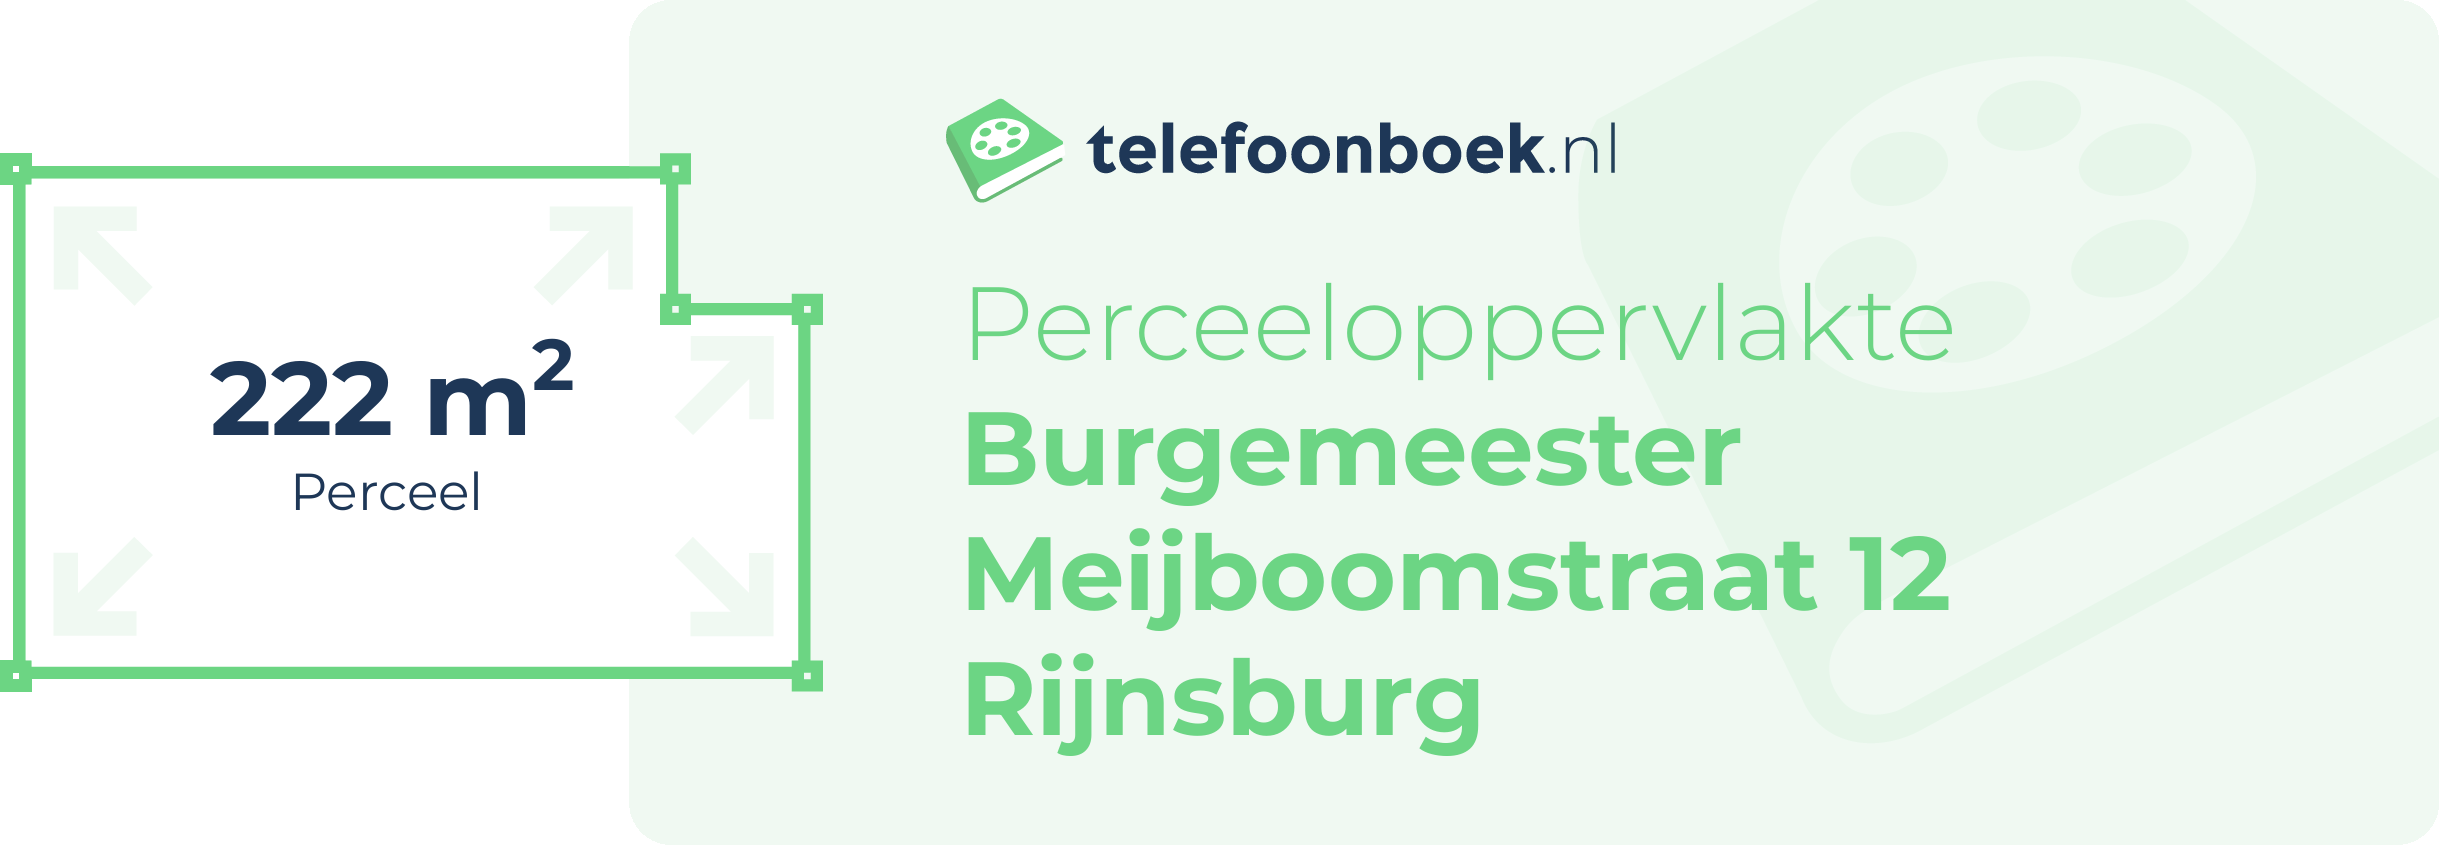 Perceeloppervlakte Burgemeester Meijboomstraat 12 Rijnsburg